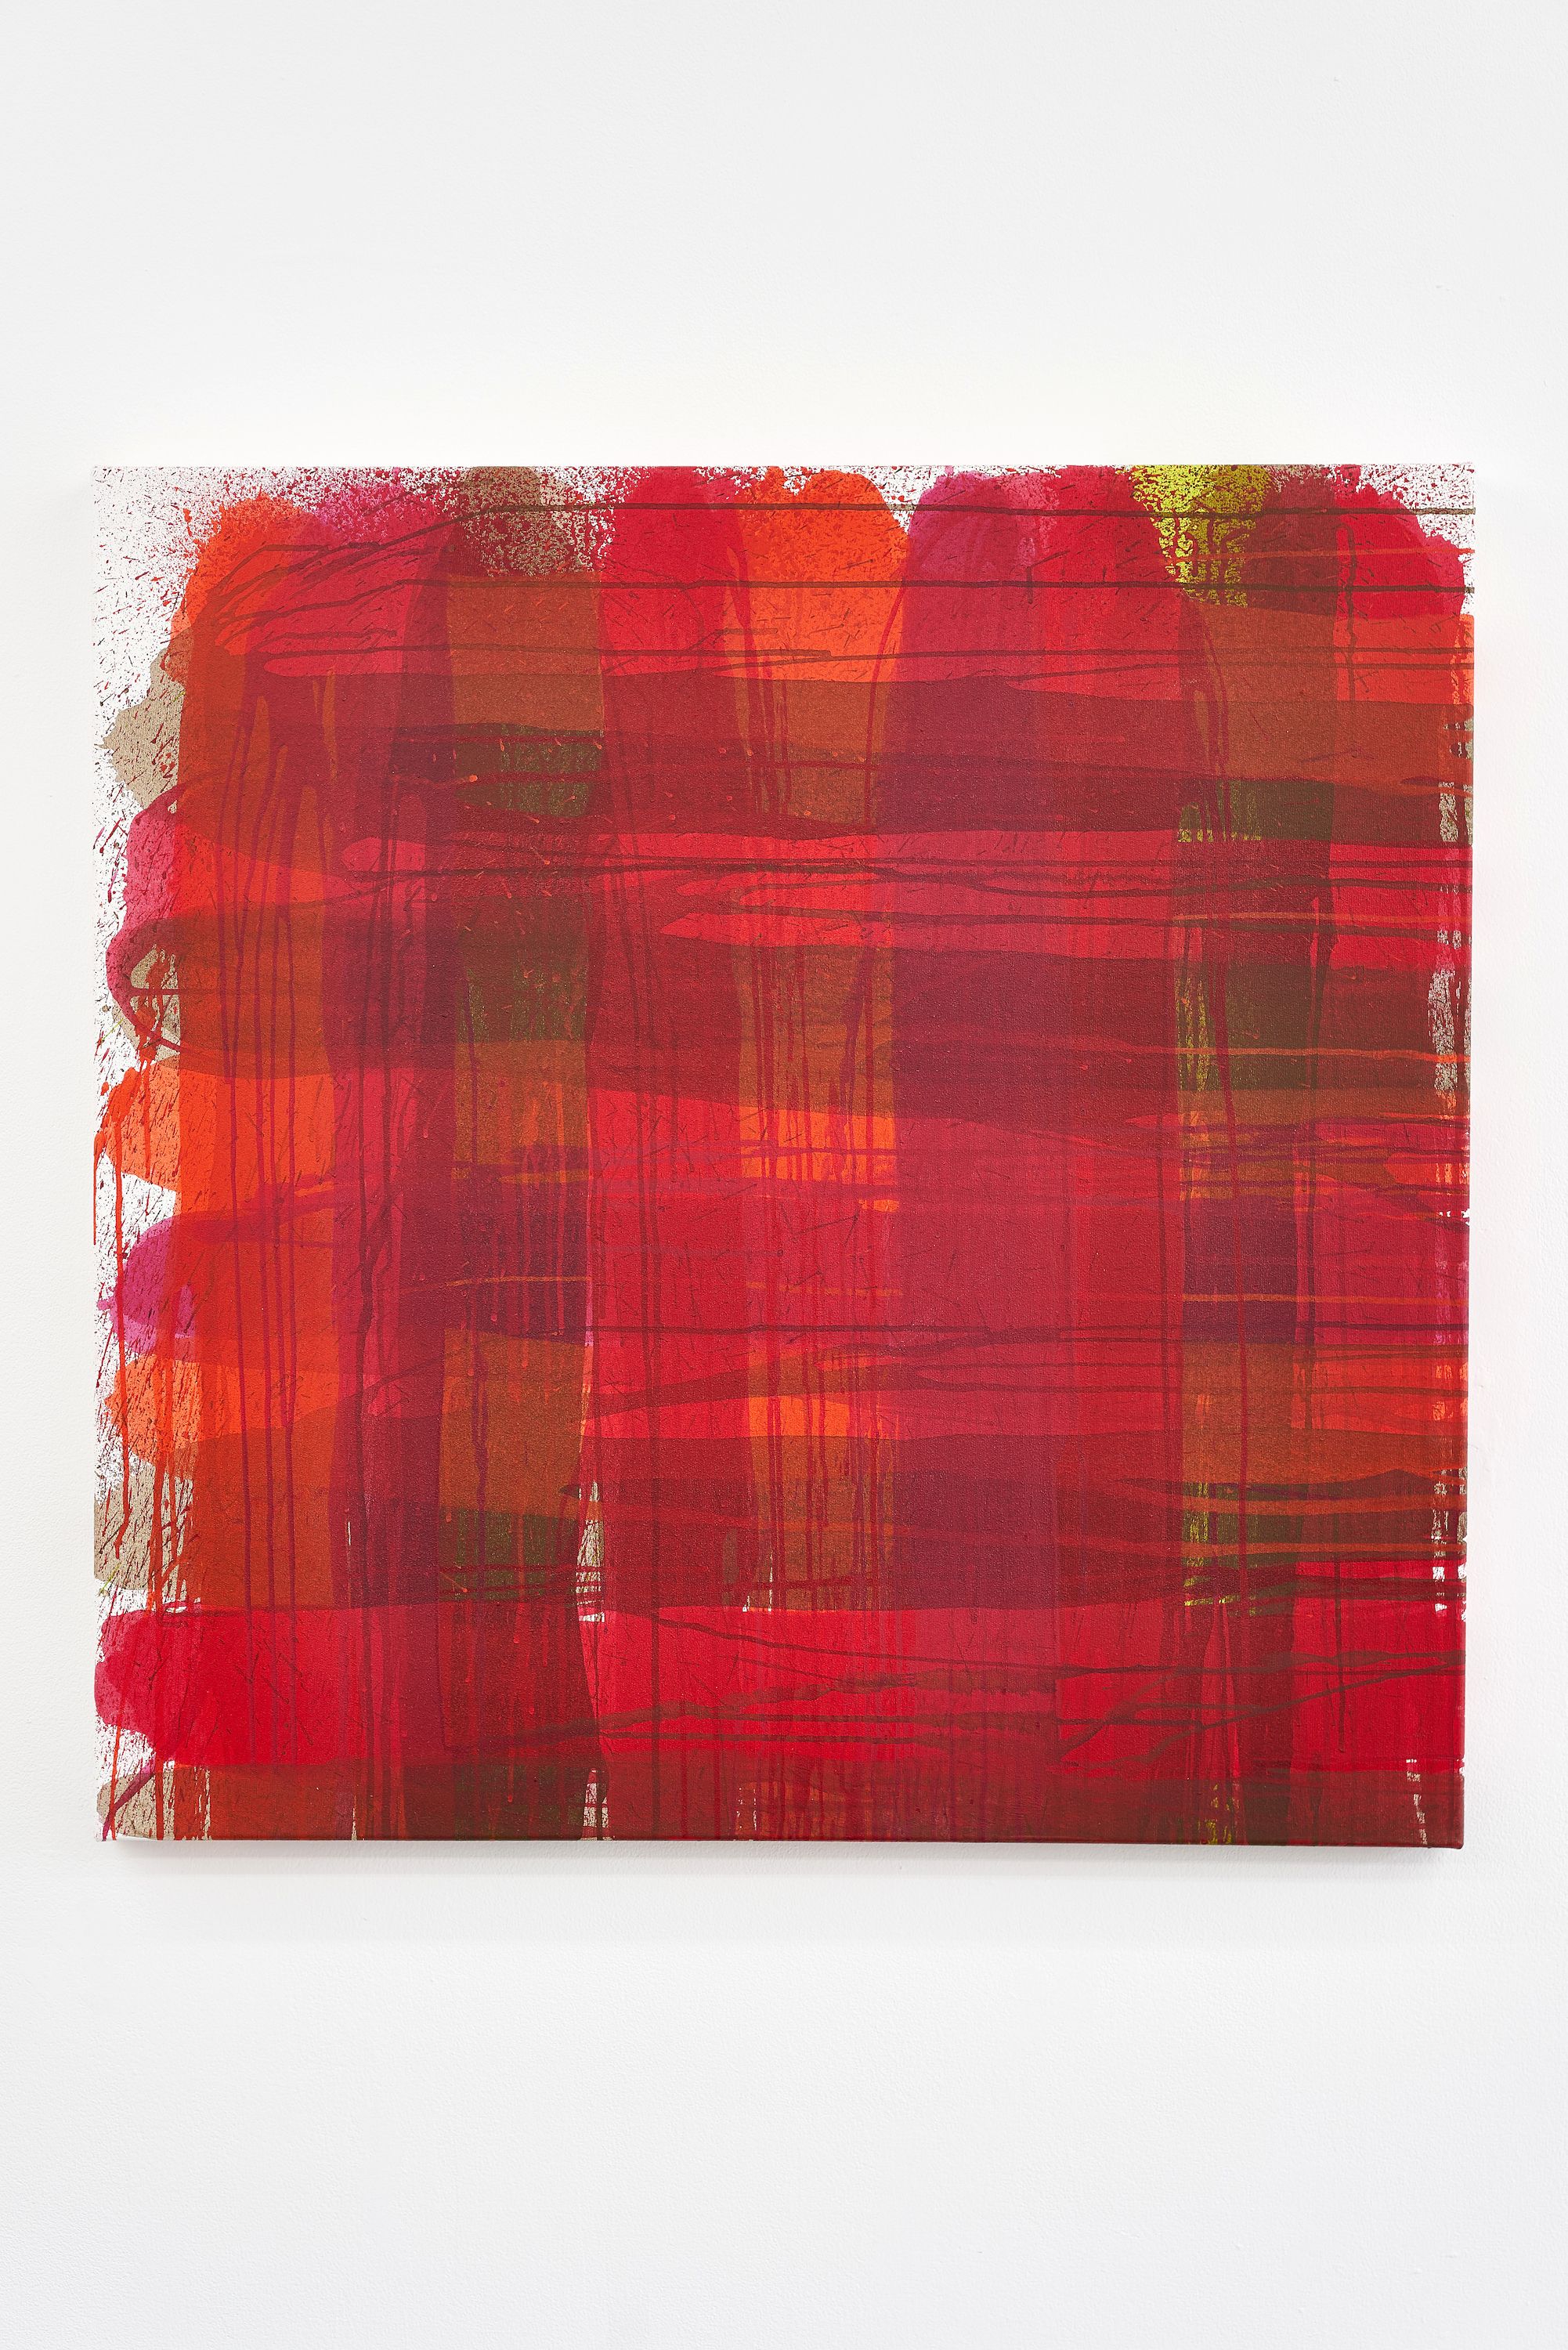 AA Bronson & Keith Boadwee, PLAID #3, 2015, Tempera on canvas, 90 ⁠× ⁠90 ⁠⁠cm